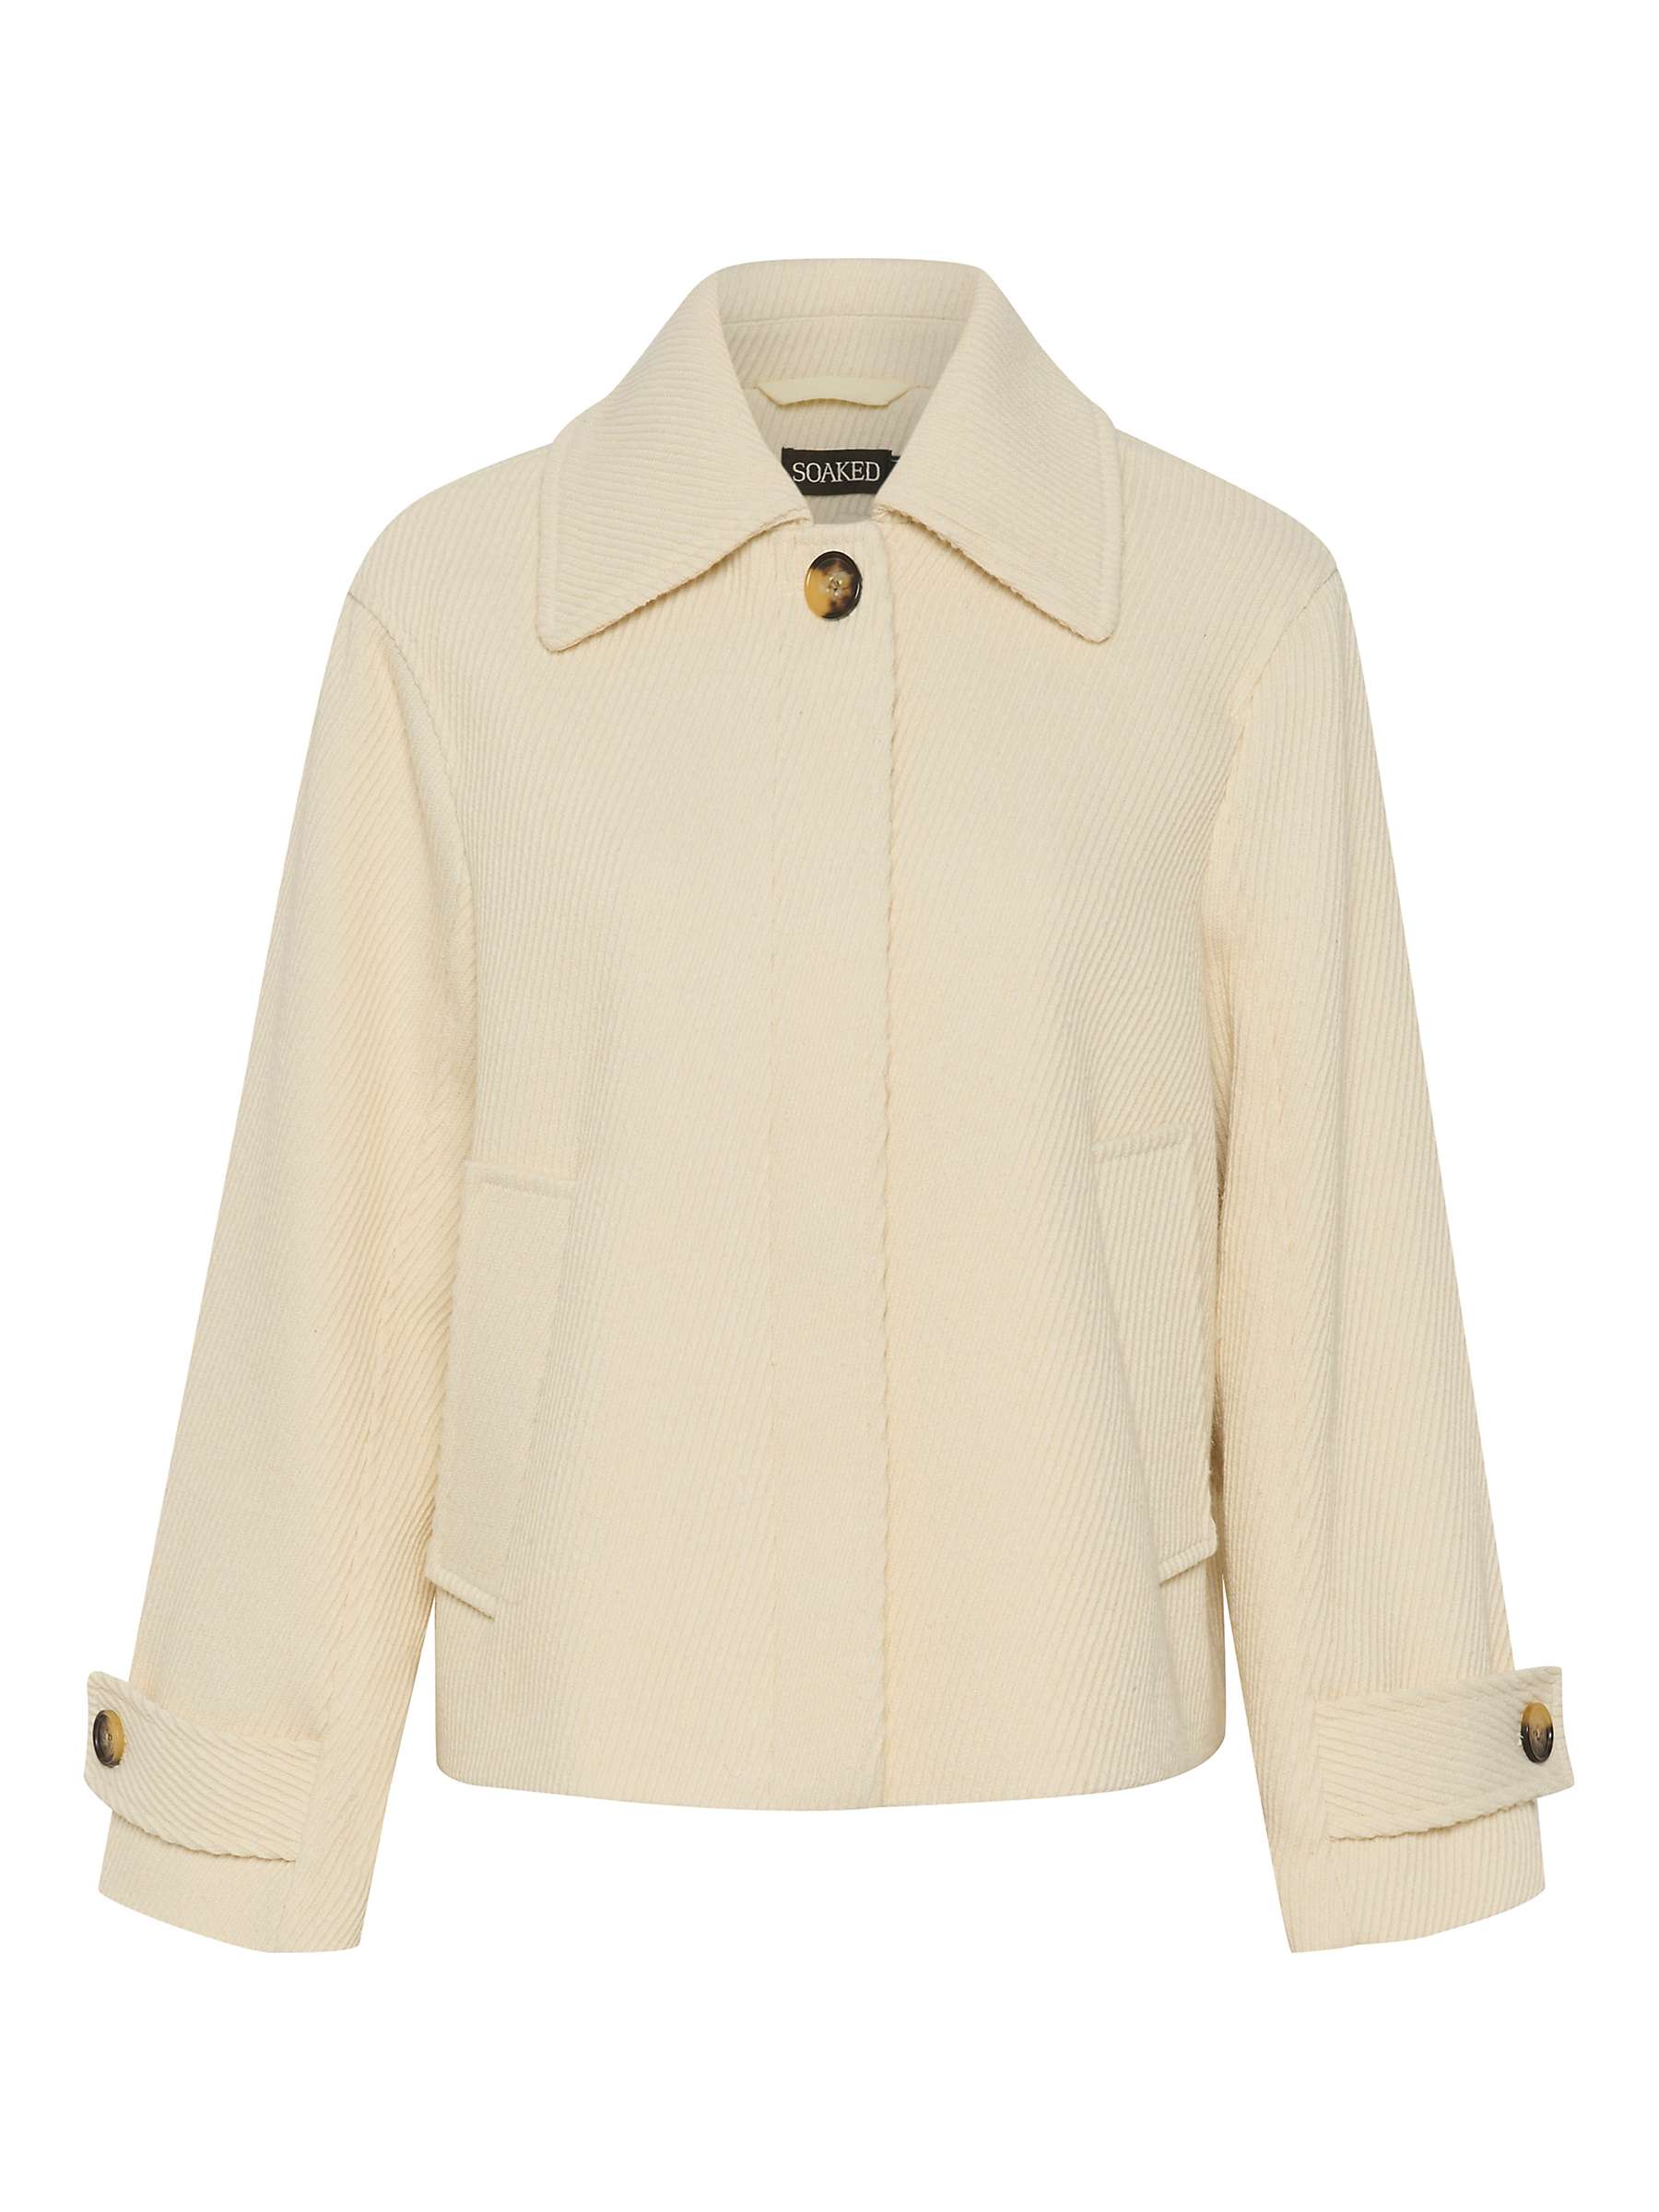 Buy Soaked In Luxury Akeleje Corduroy Jacket, Whisper White Online at johnlewis.com